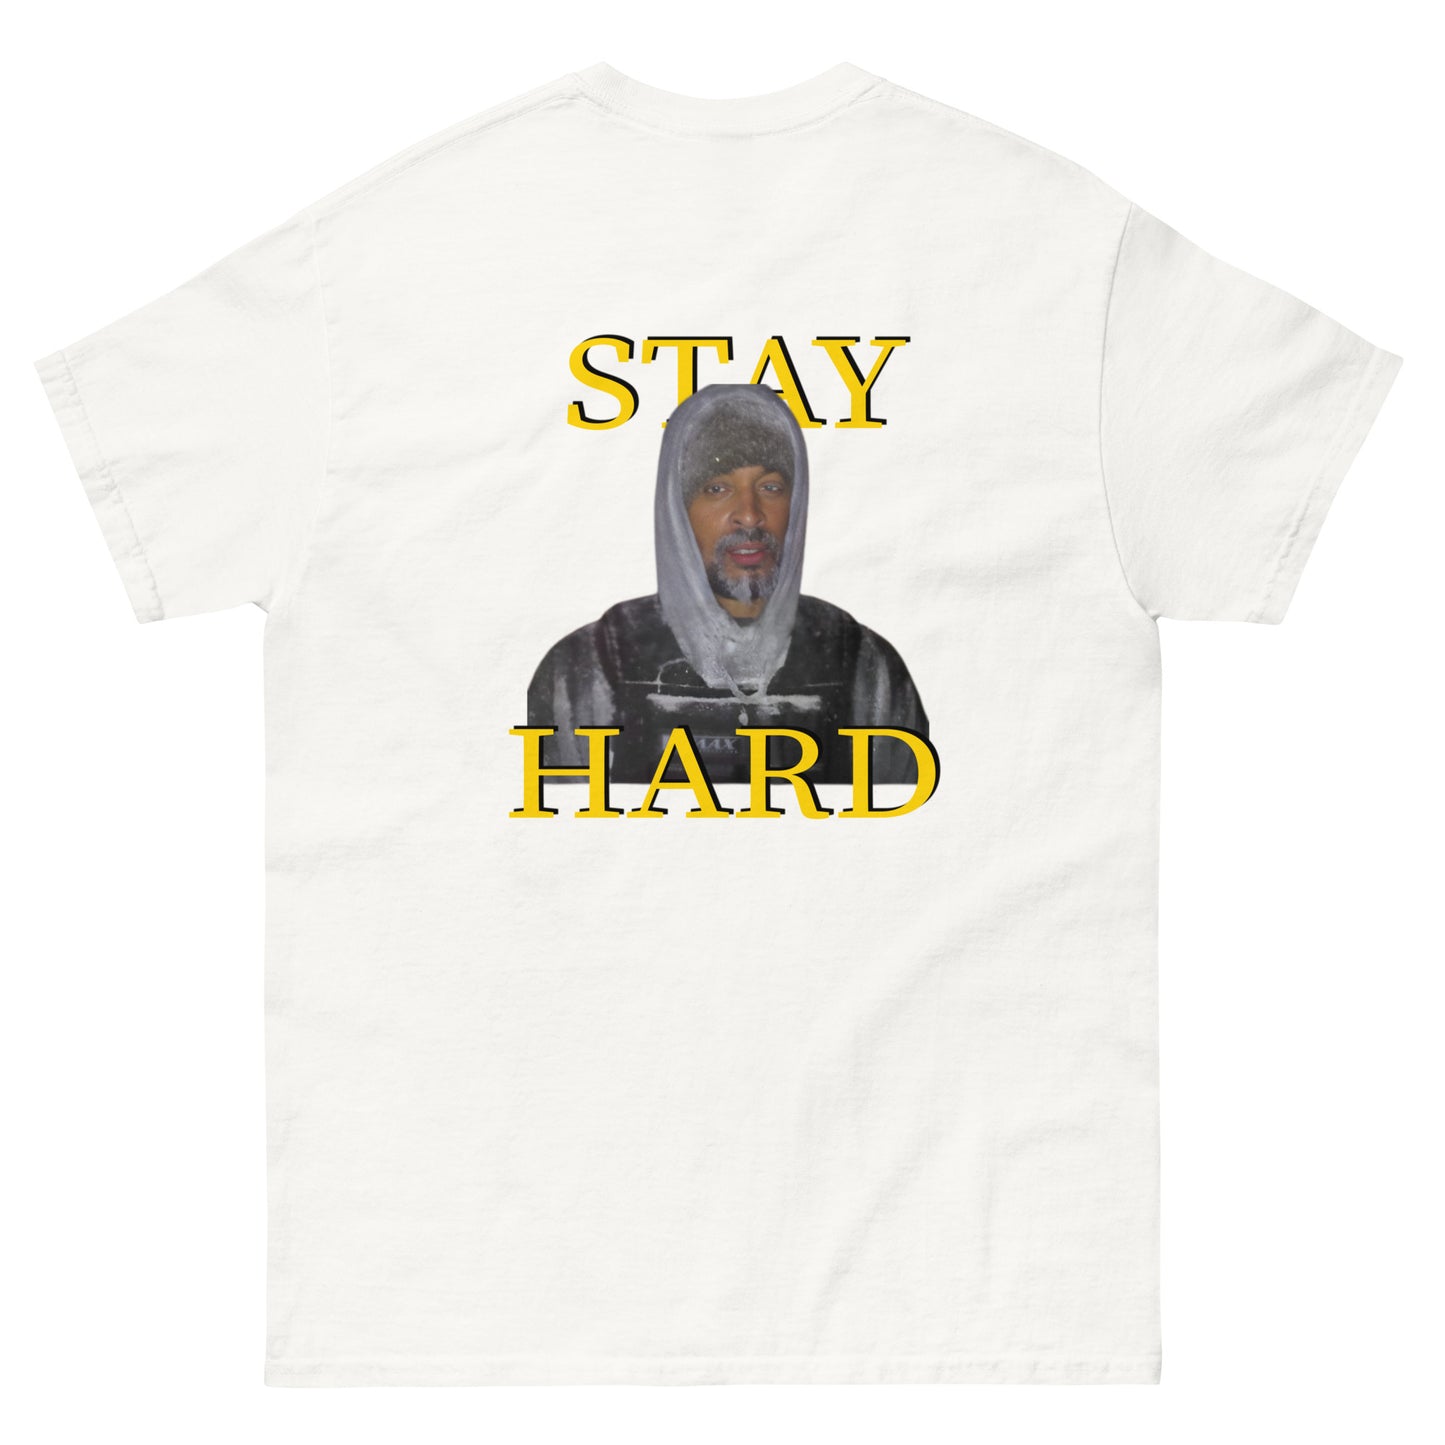 "Stay hard" - Classic T-Shirt